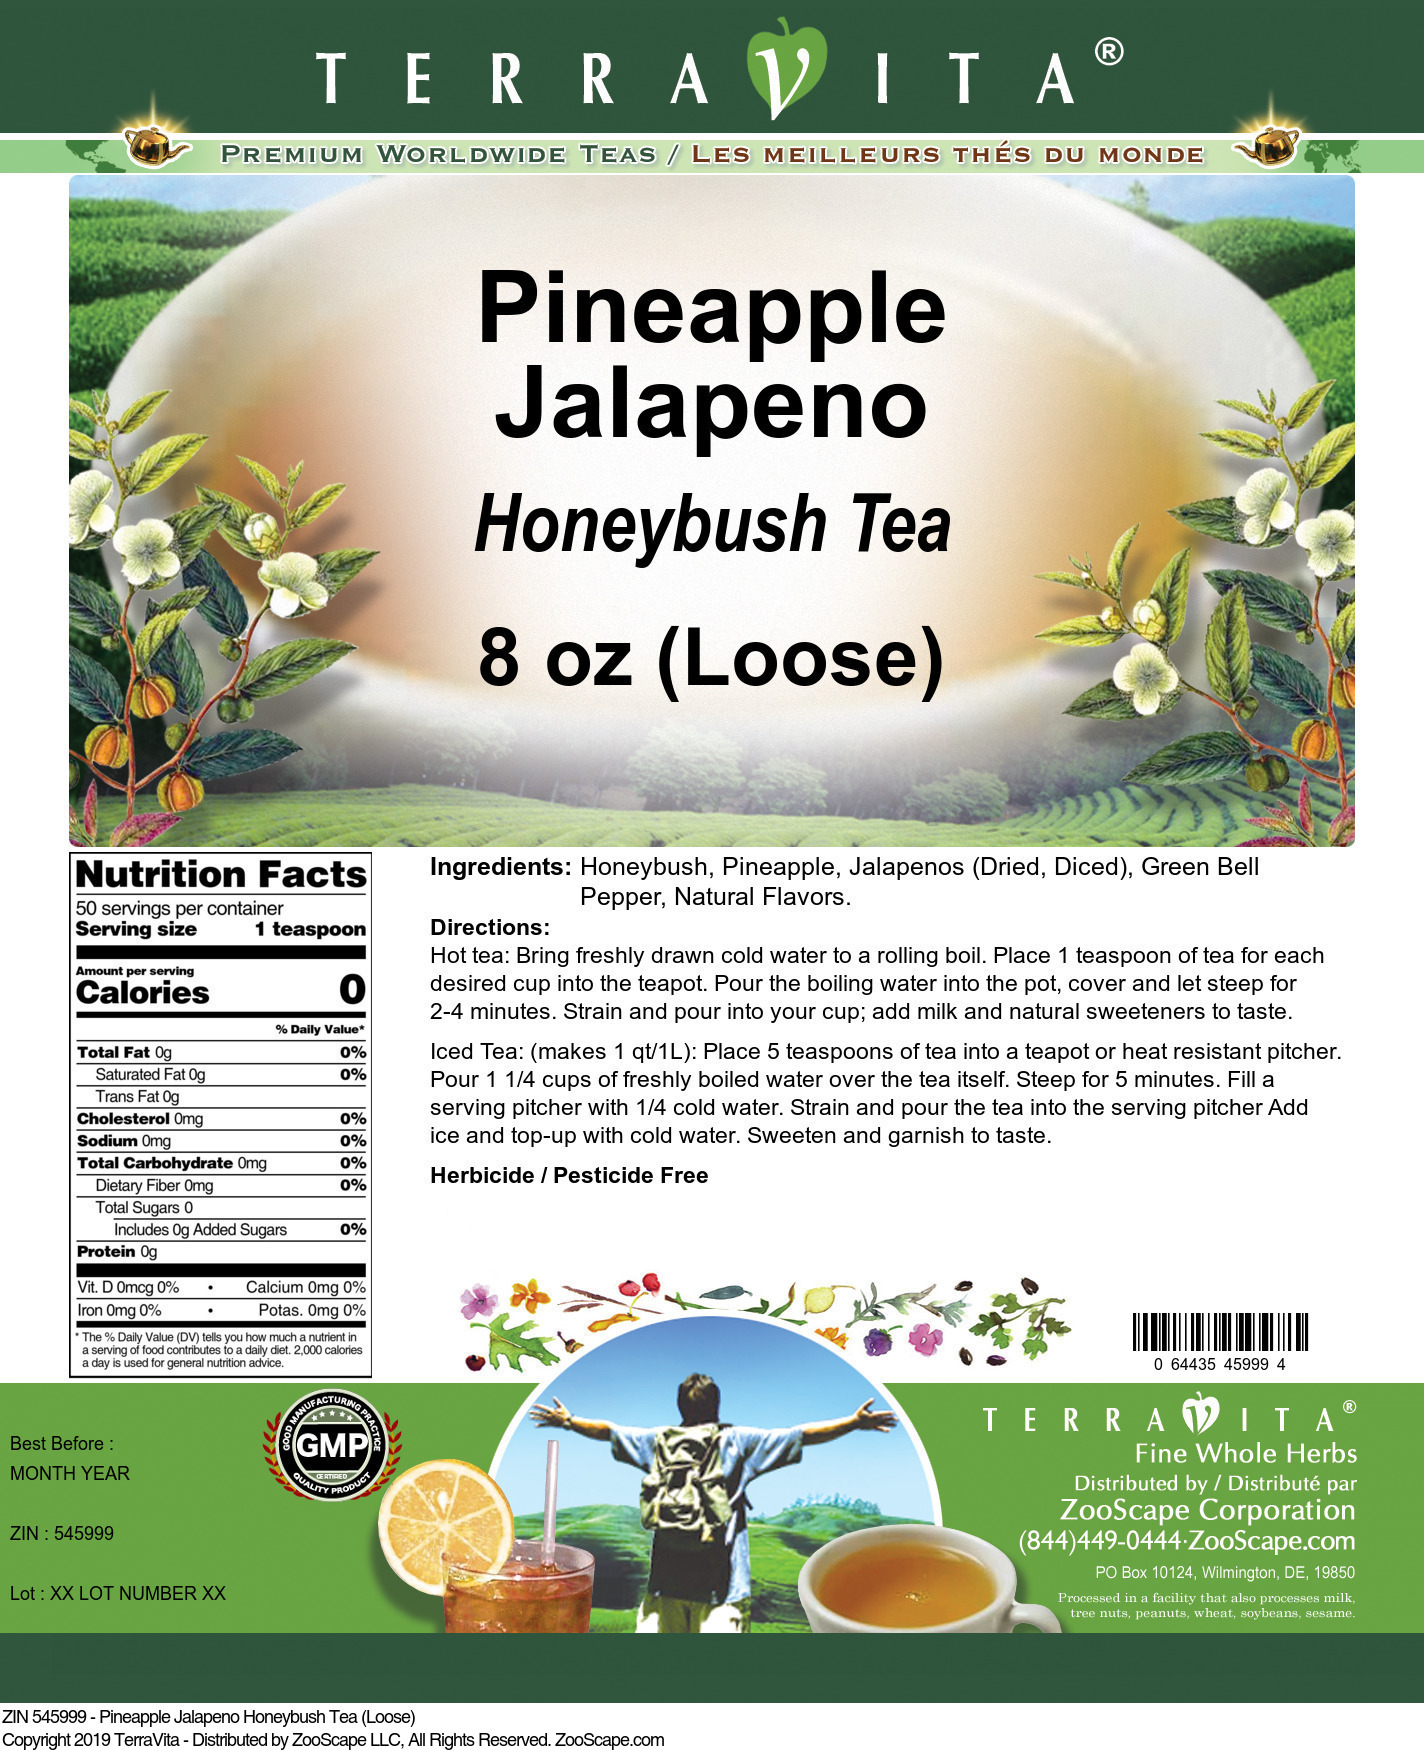 Pineapple Jalapeno Honeybush Tea (Loose) - Label